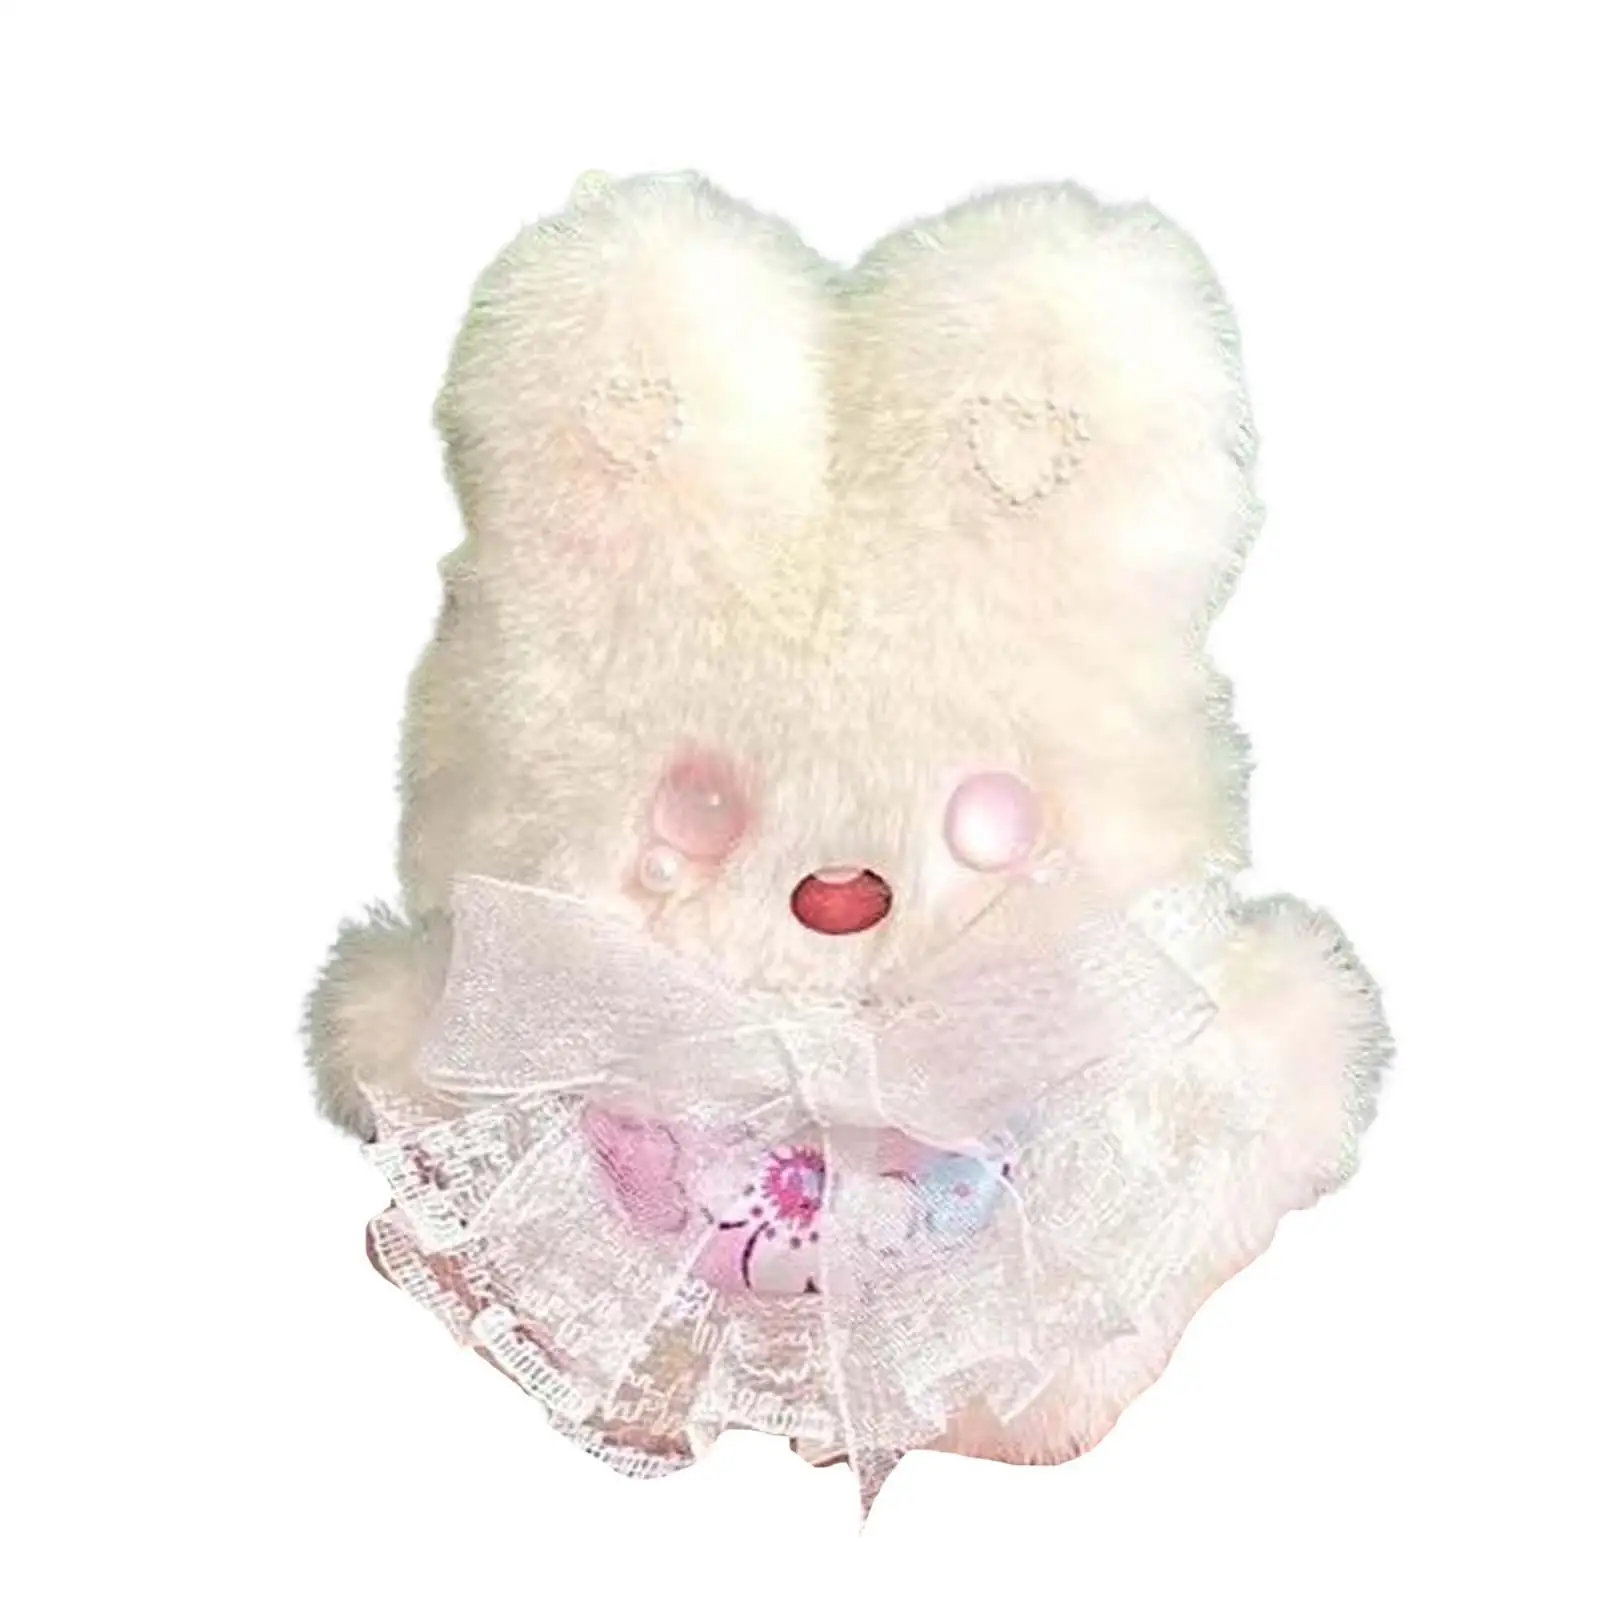 Stuffed Animal Making Kit Plush Doll Making Kits for Girls Kids Adults